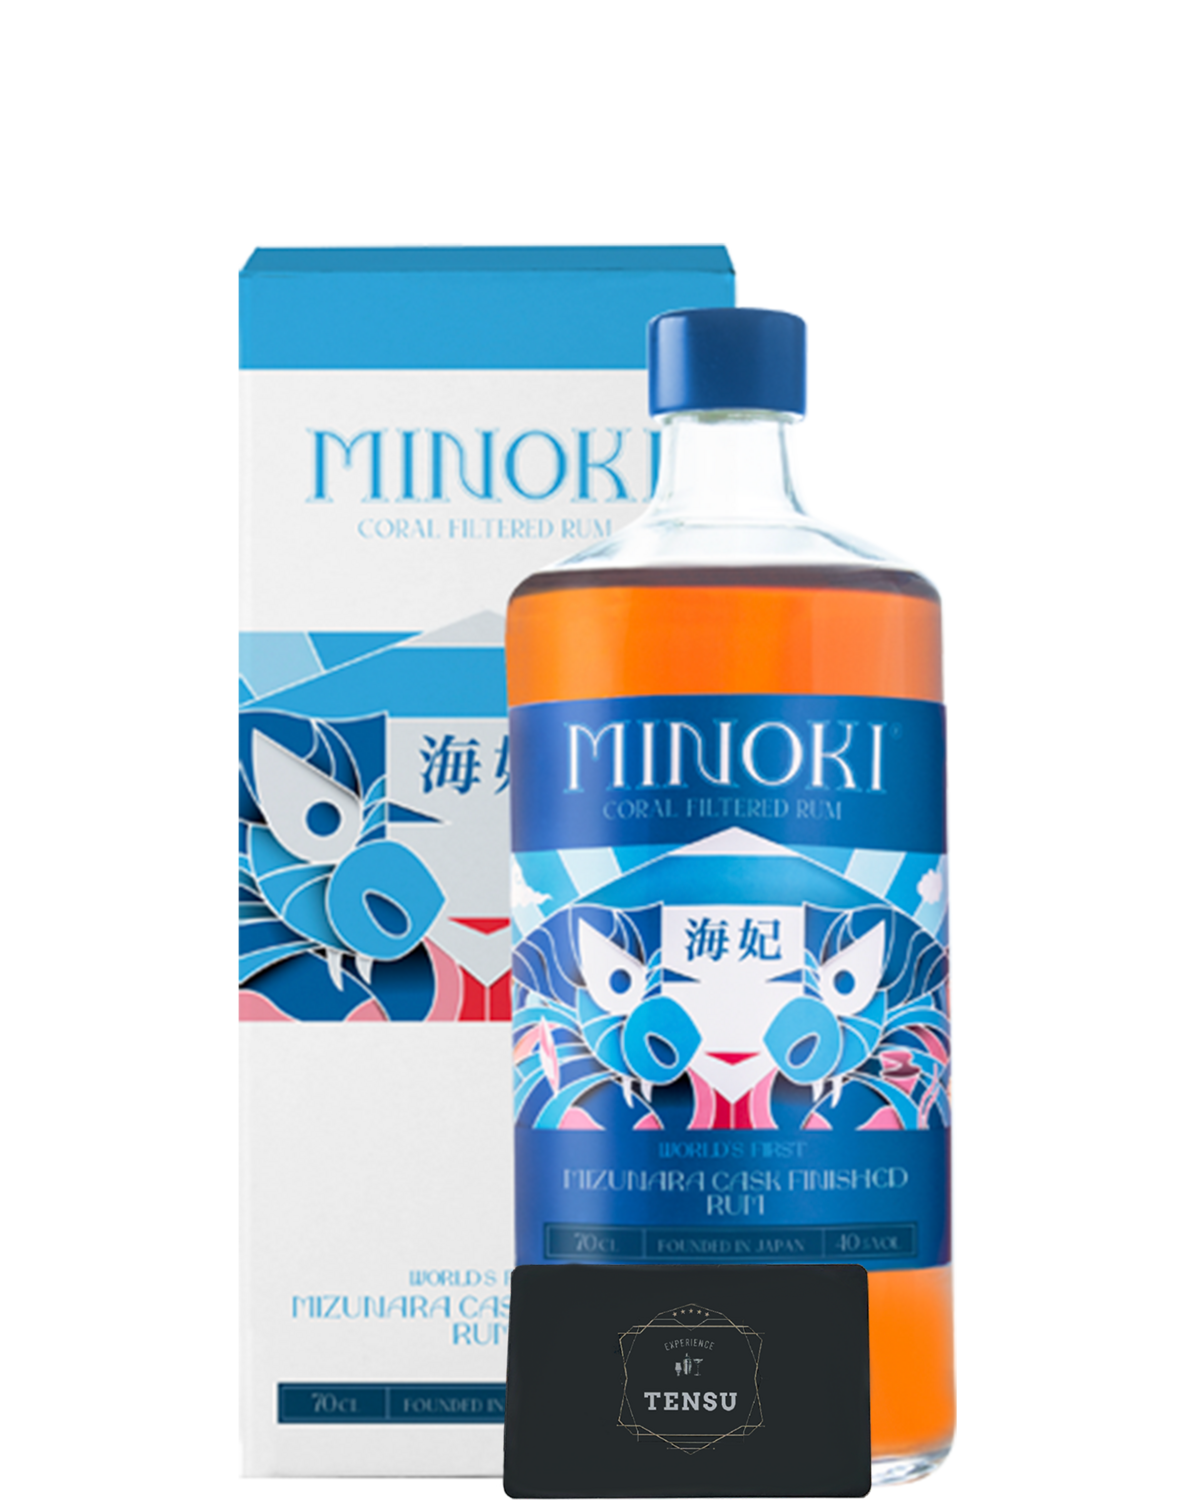 Minoki Coral Filtered Rum -Mizunara Cask Finish- (2022) 40.0 OB